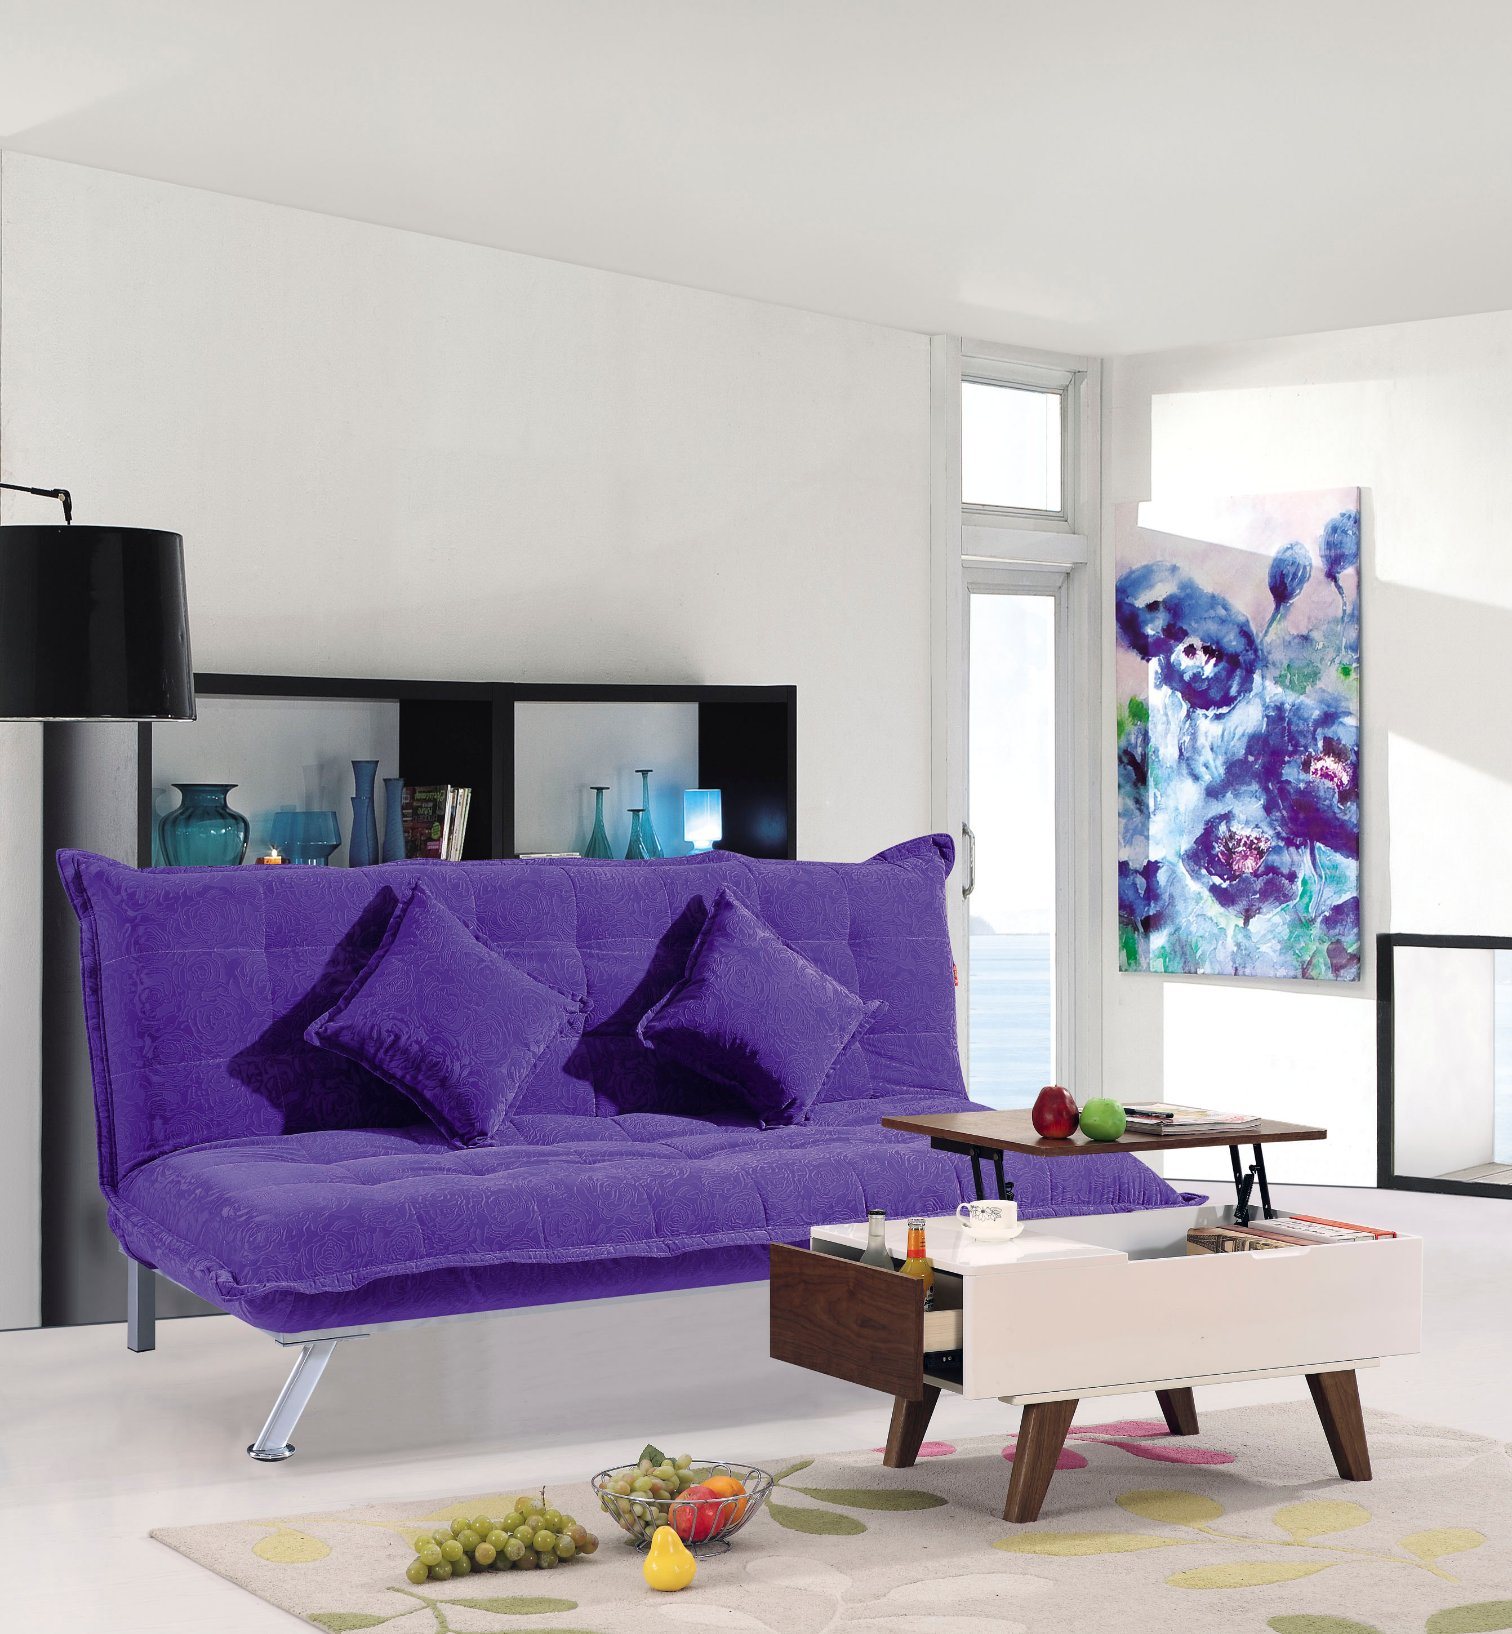 Bedroom Leisure Furniture - Hotel Furniture - Sofa Bed